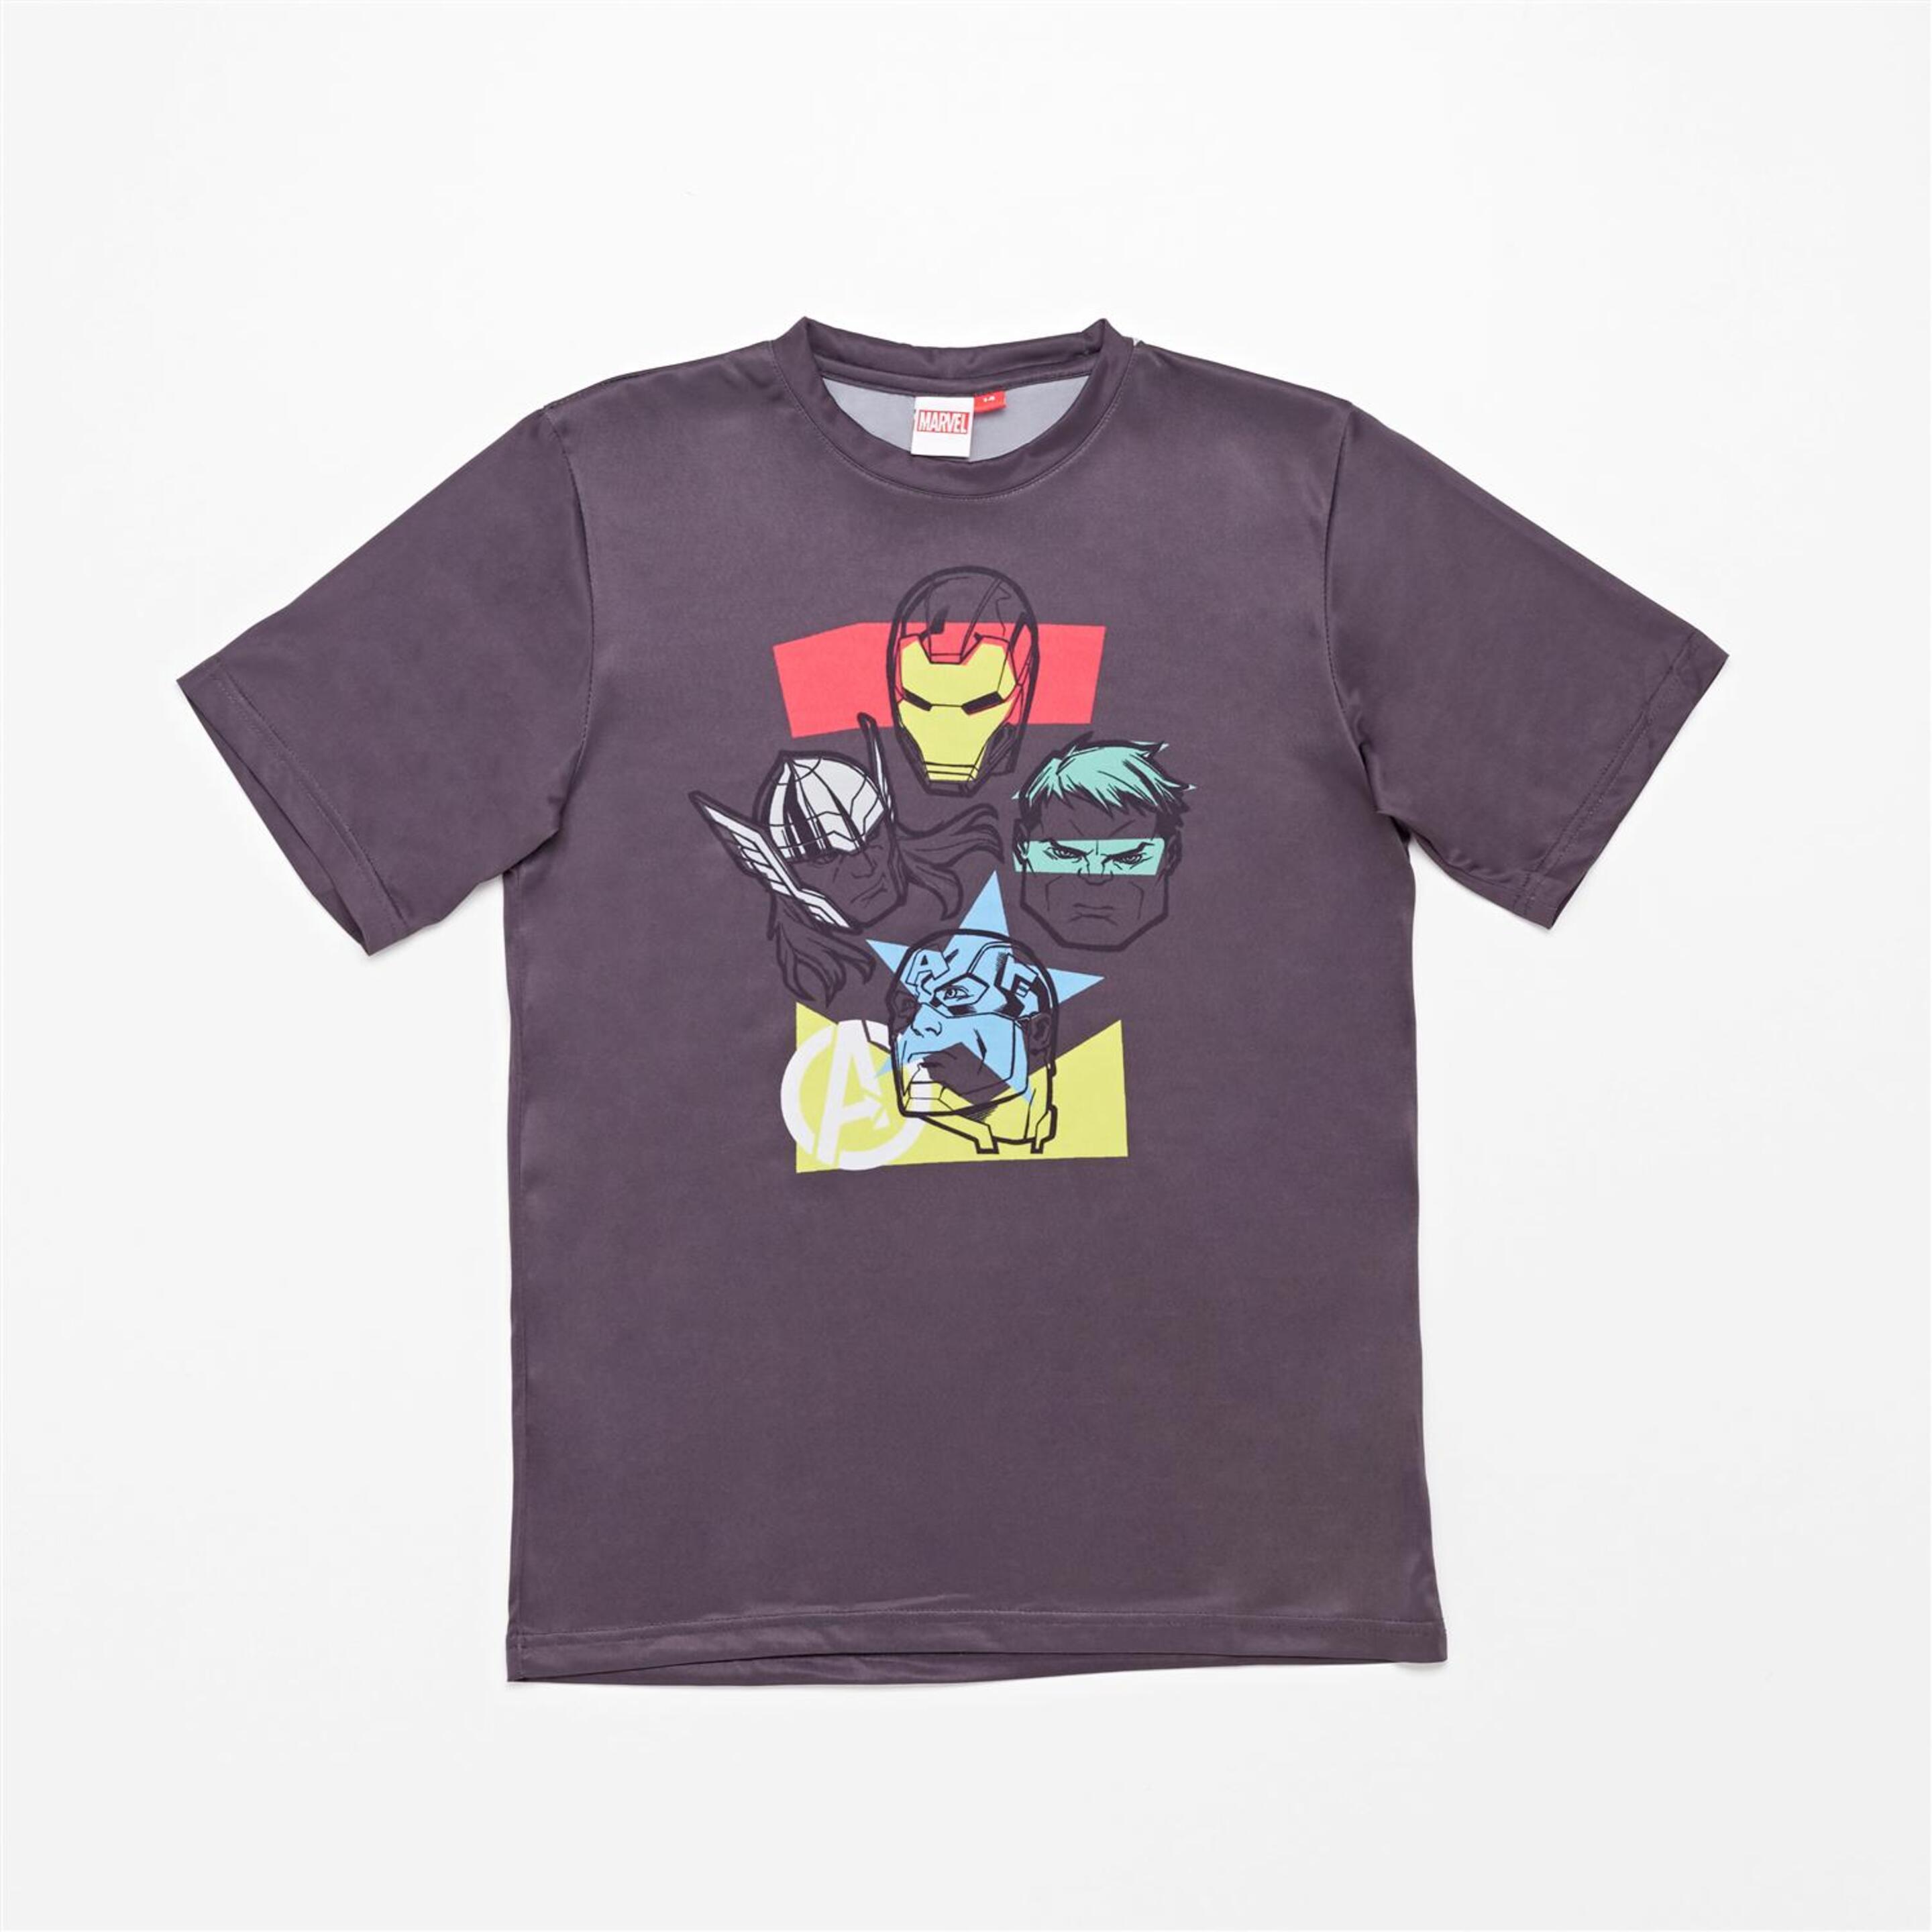 T-shirt Avengers